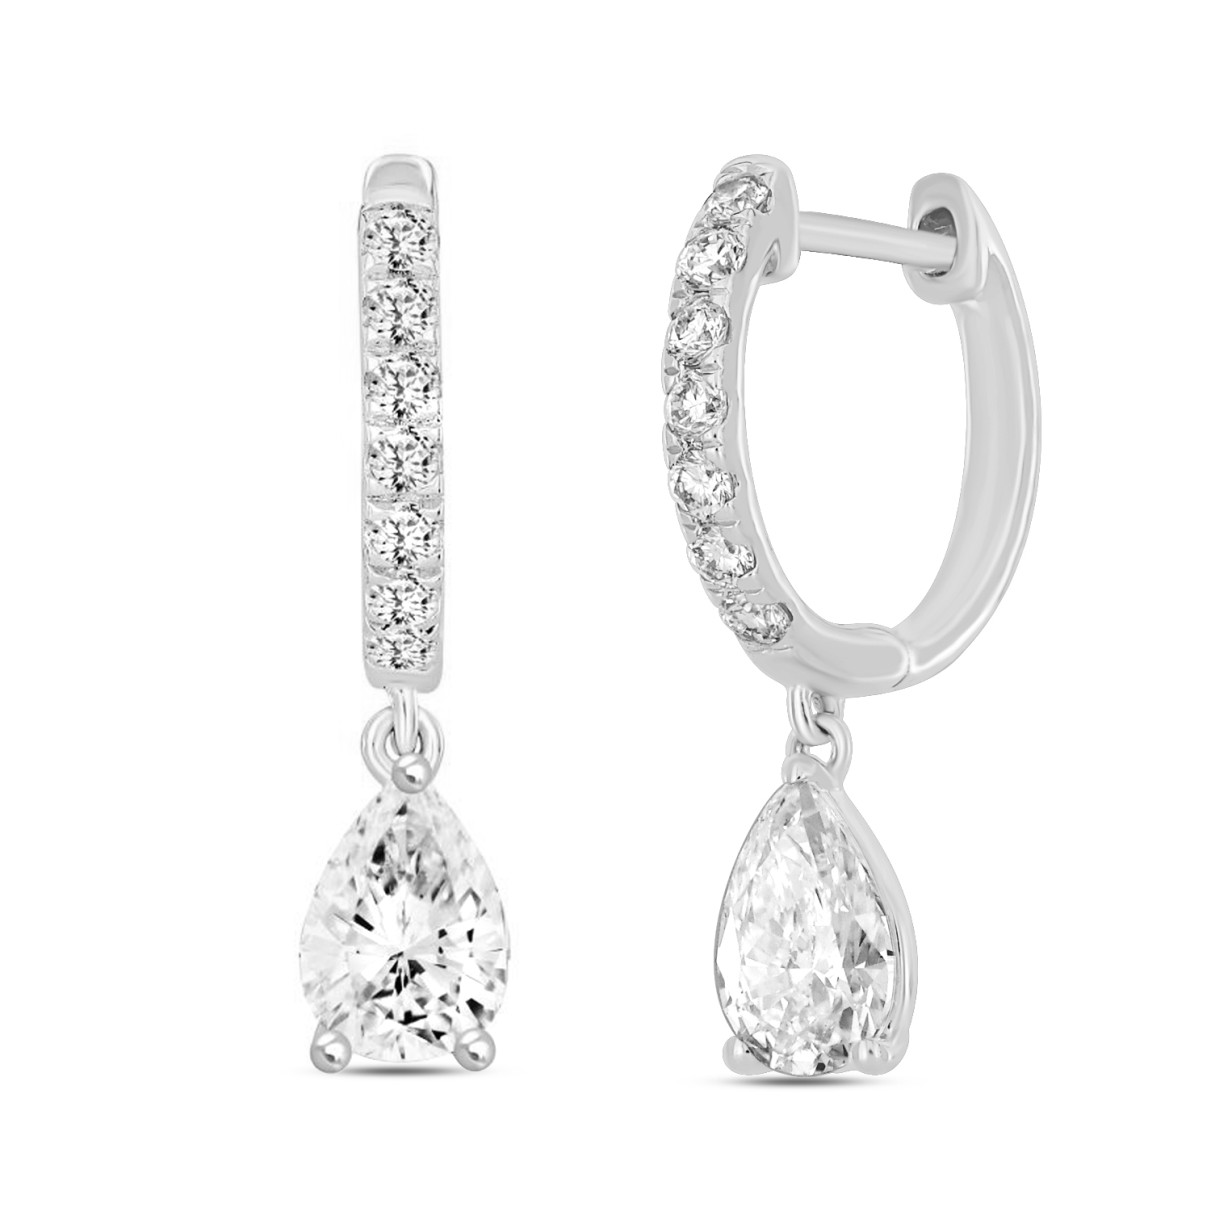 LADIES EARRINGS 1 1/4CT PEAR/ROUND DIAMOND 14K WHITE GOLD (CENTER STONE PEAR DIAMOND 1CT)